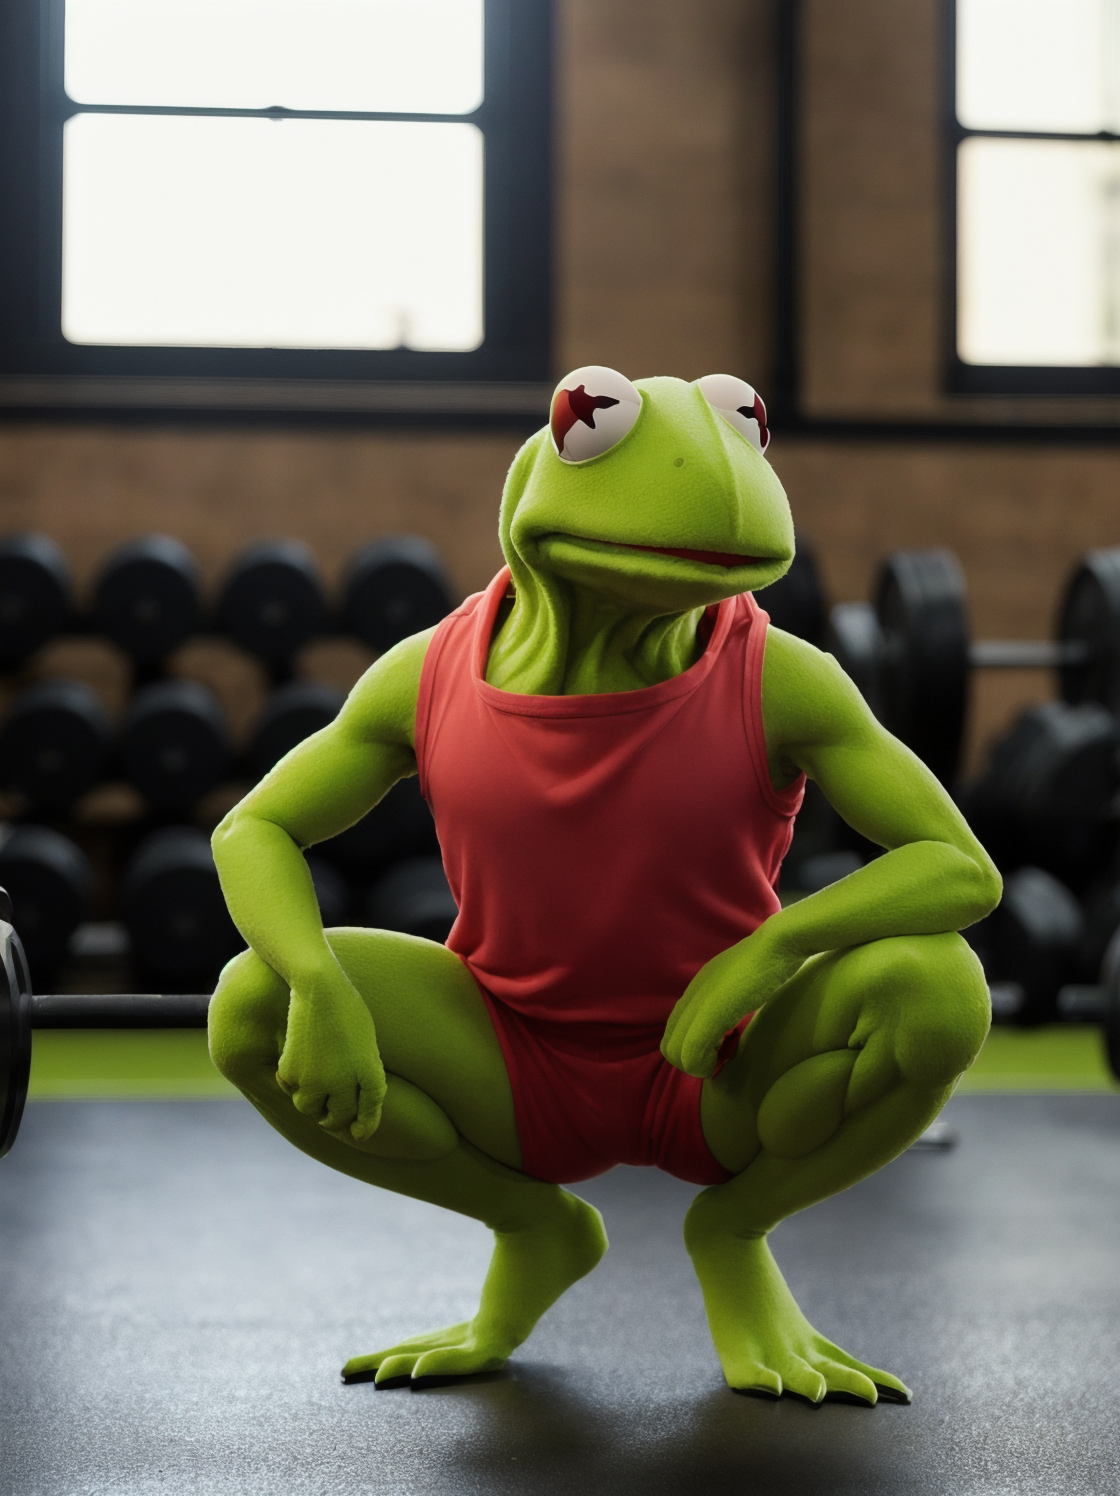 Kermit the Frog doing deadlifts at a luxury gym, portra 400, gym shot (vibrant, vignette, dark, sharp focus, 8k).